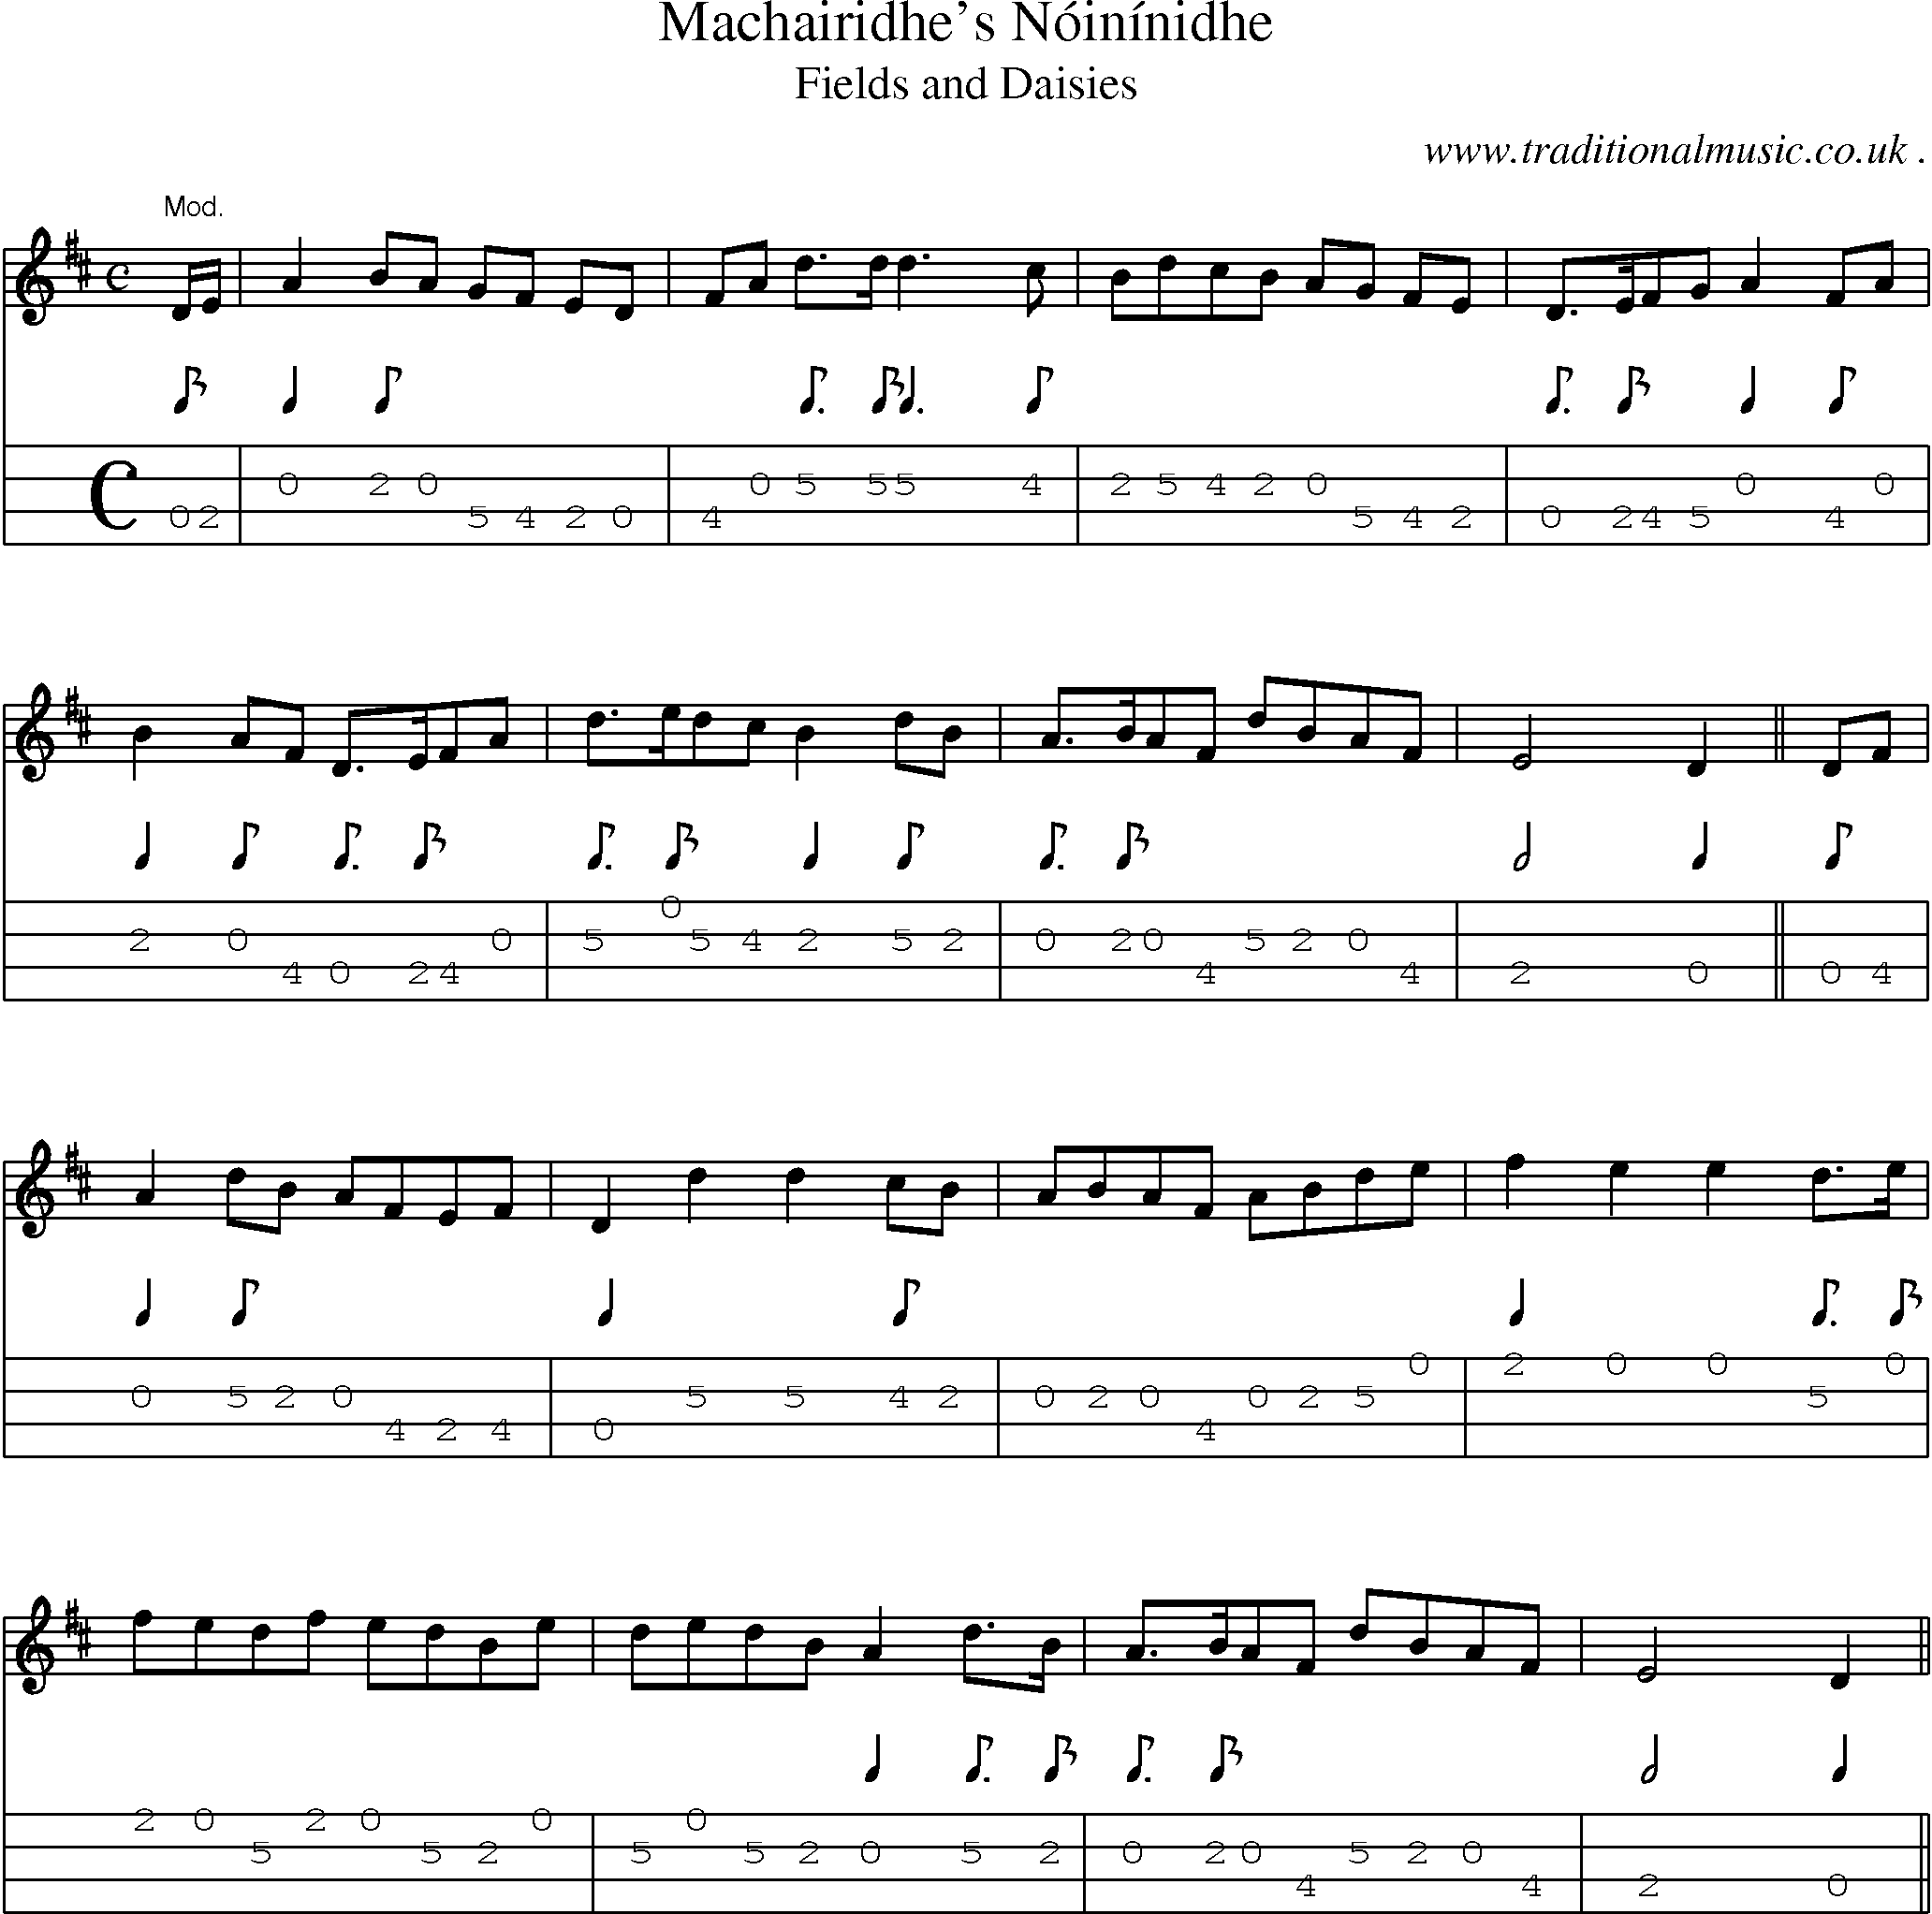 Sheet-Music and Mandolin Tabs for Machairidhes Noininidhe